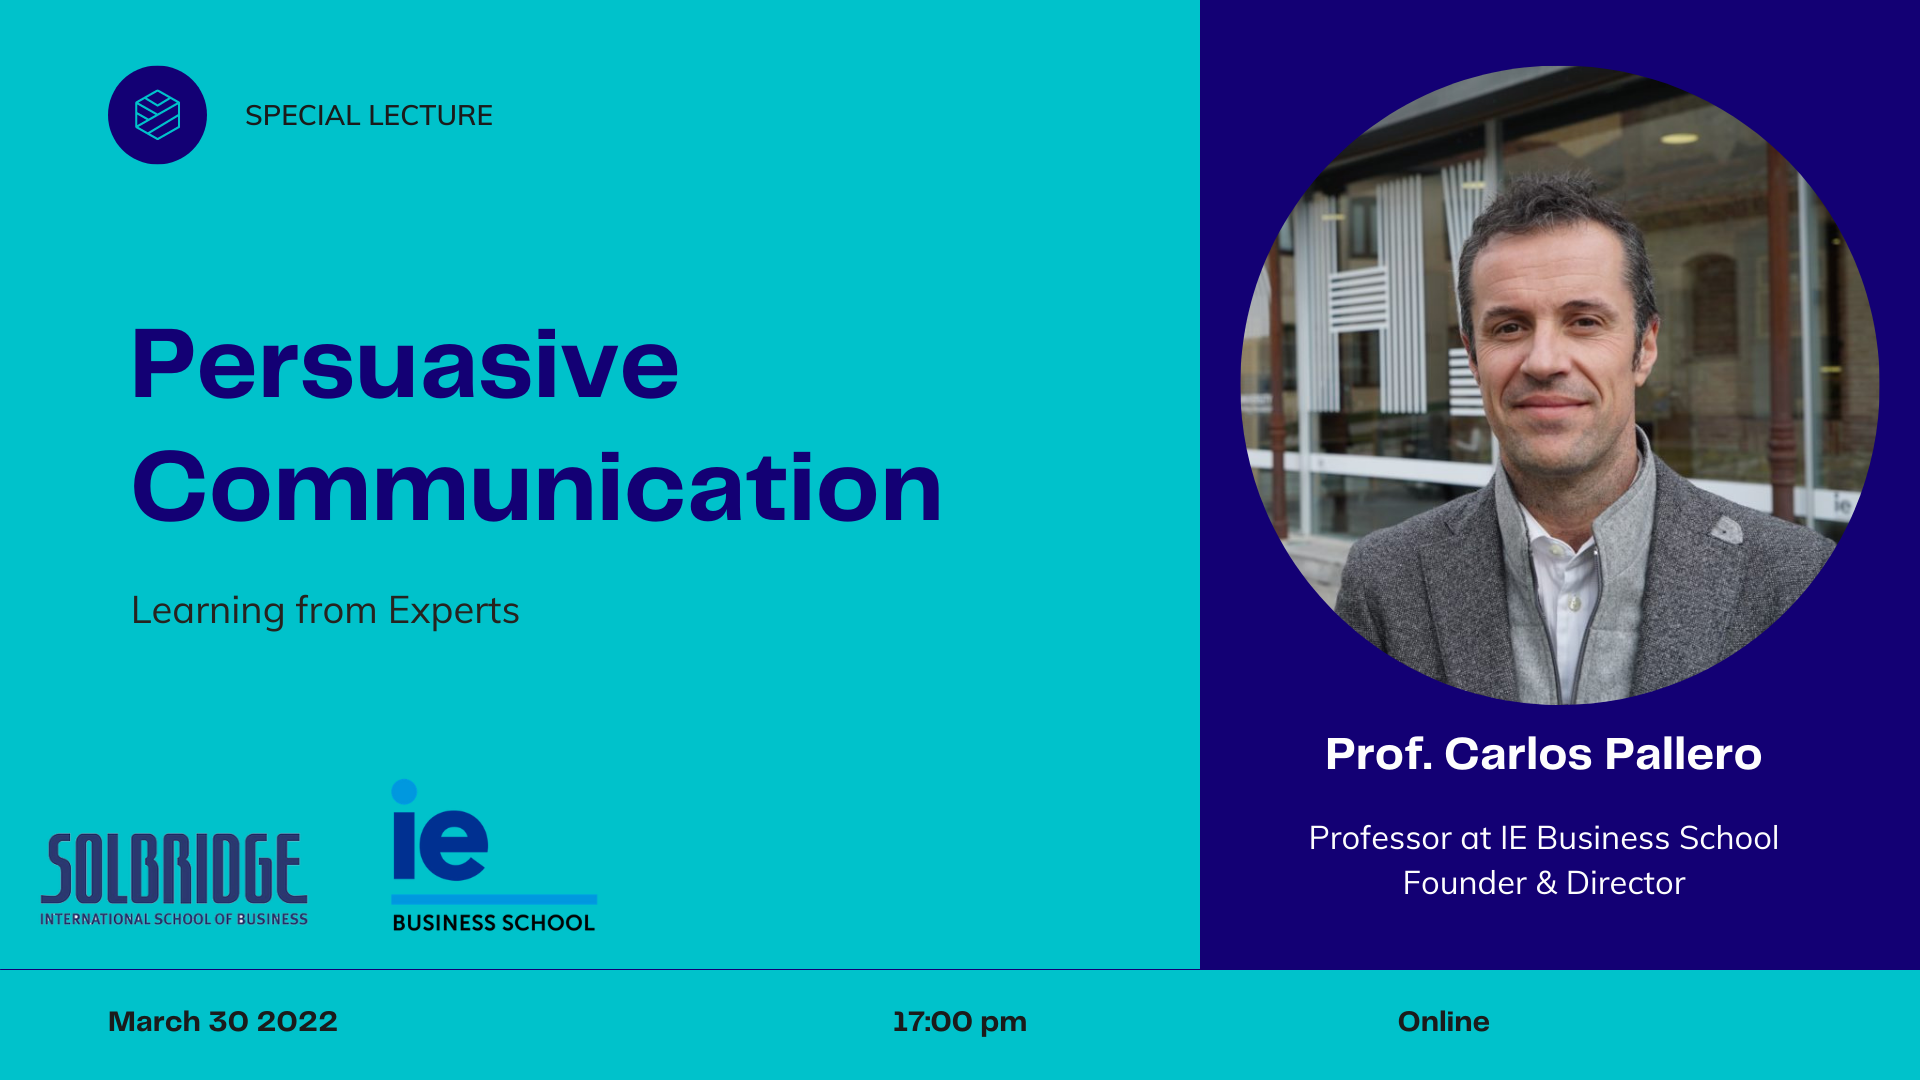 Persuasive Communication by Prof. Carlos Pallero